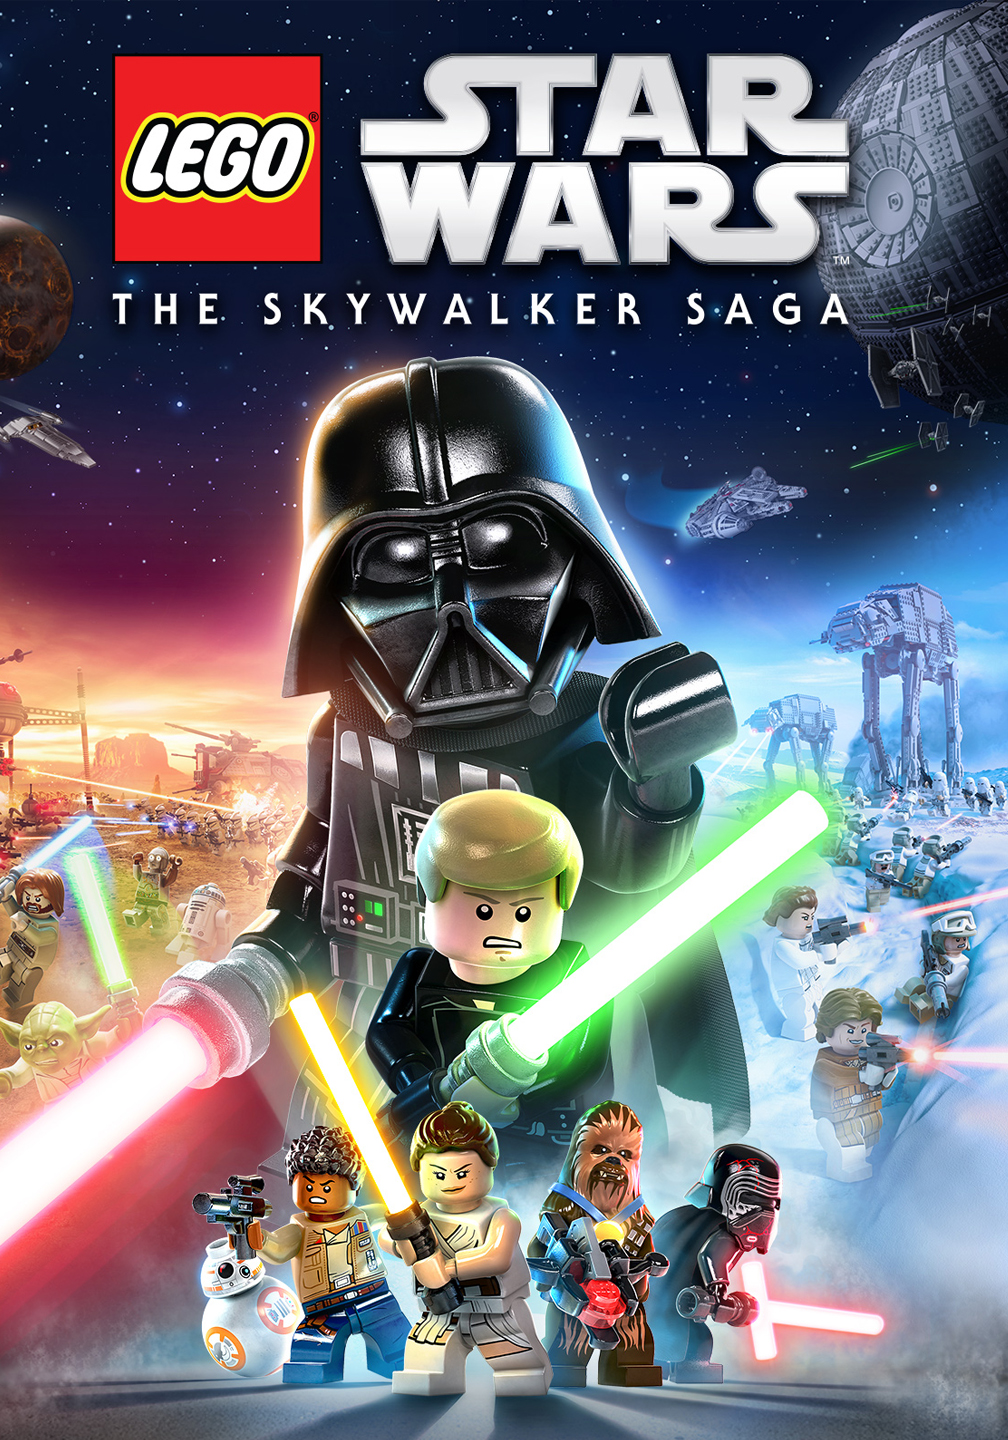 Lego Star Wars poster